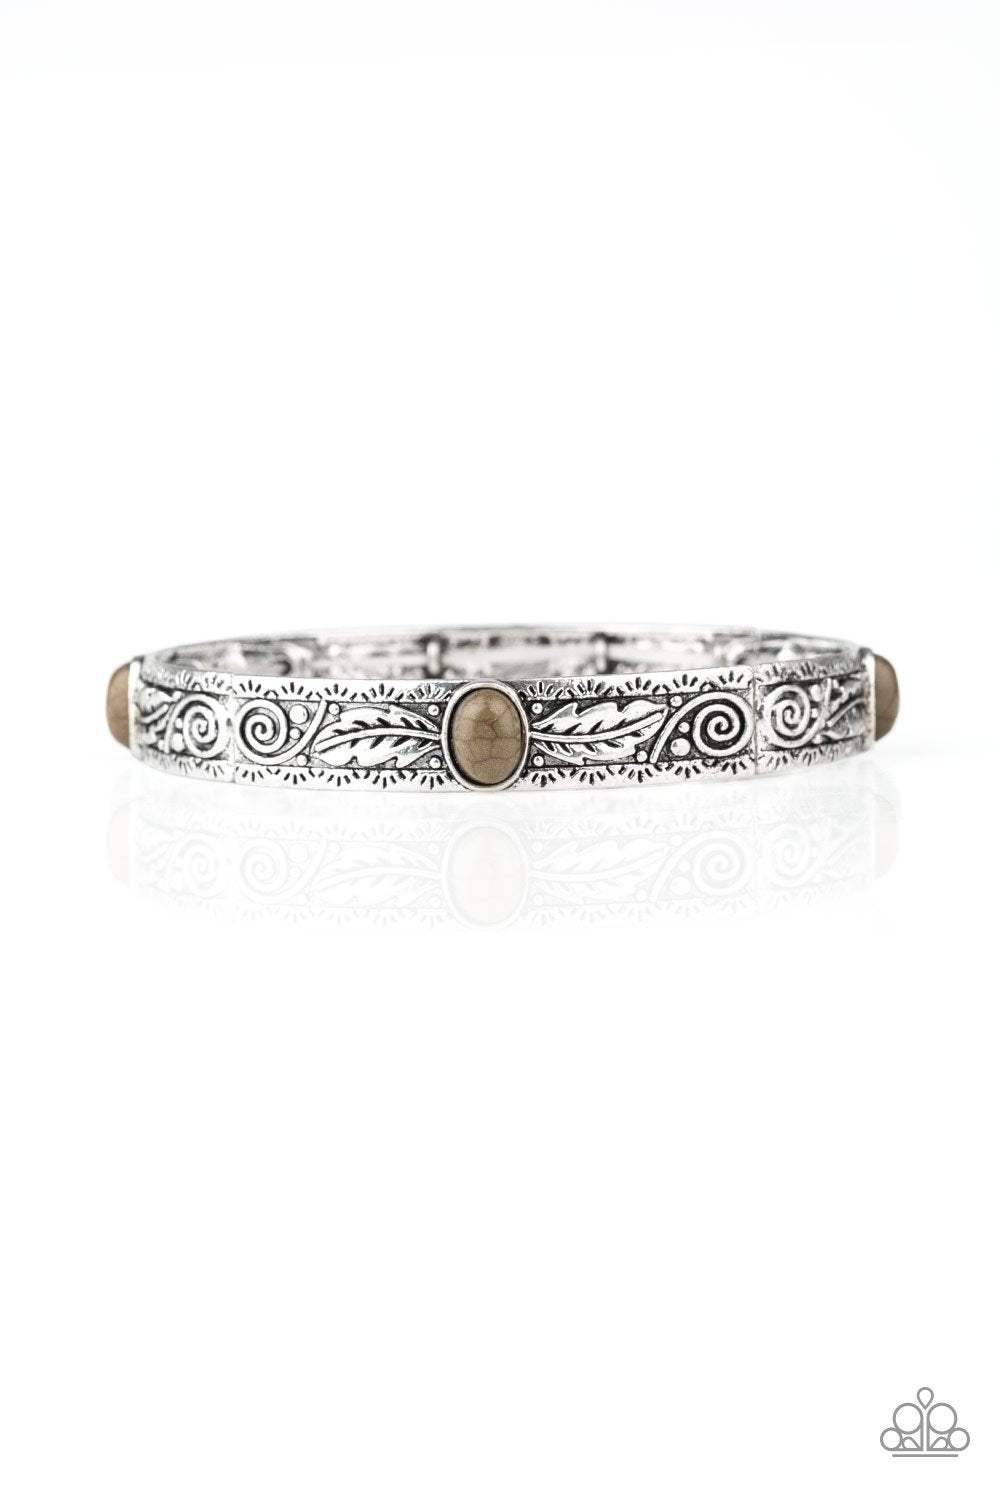 Wild West Story Green Stone and Silver Stretch Bangle Bracelet - Paparazzi Accessories-CarasShop.com - $5 Jewelry by Cara Jewels